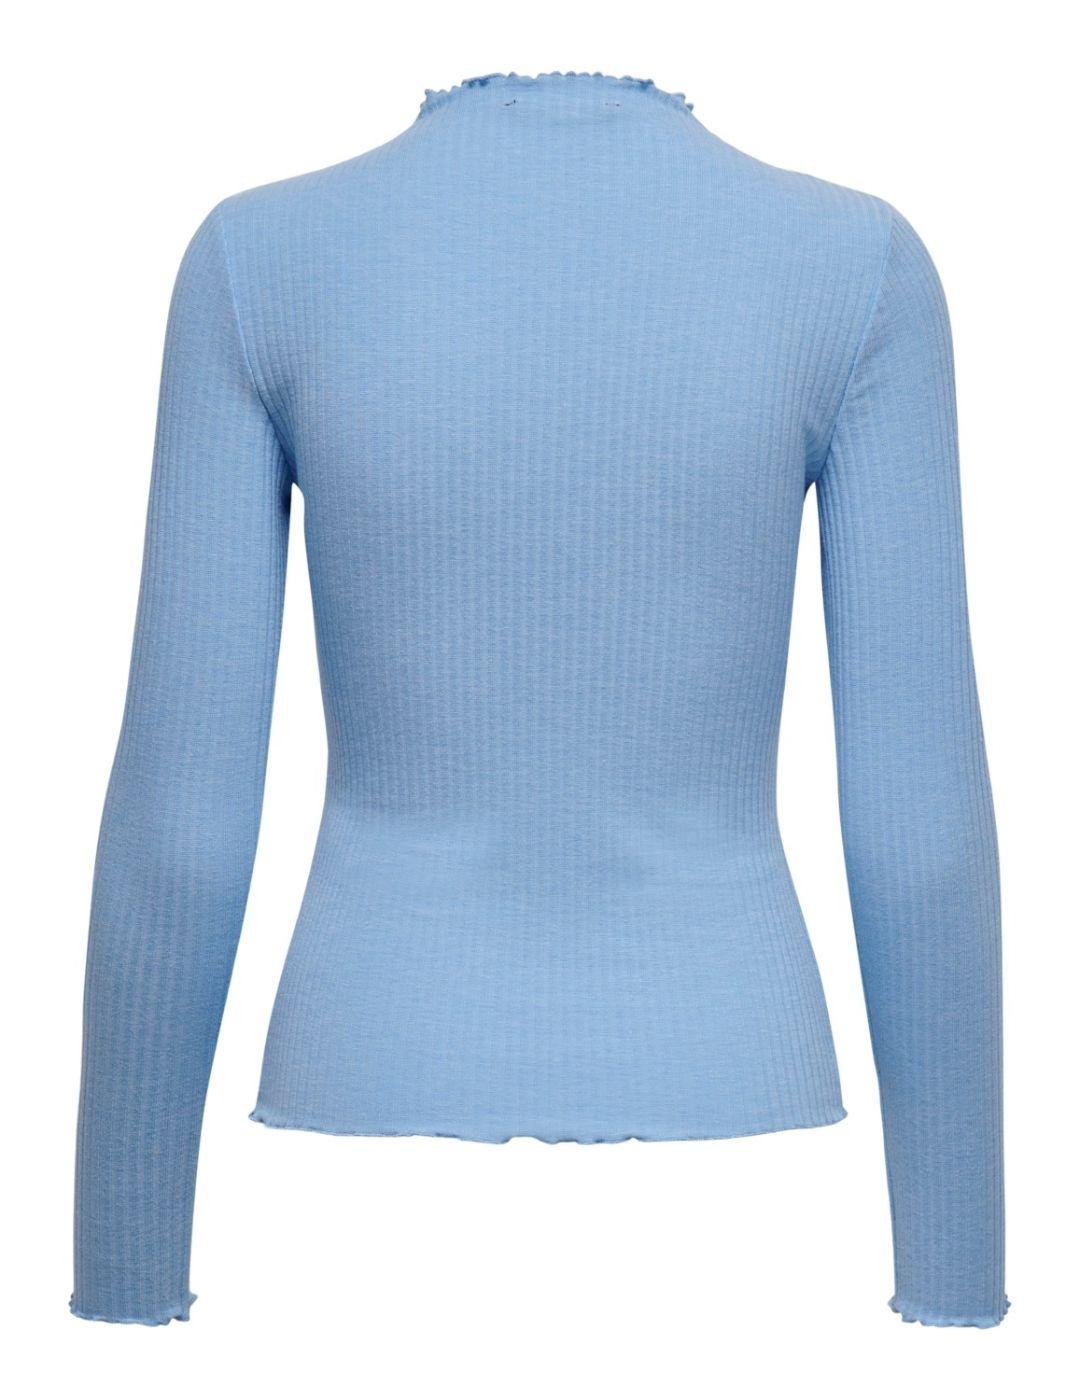 Camiseta Only manga larga azul claro para mujer-z